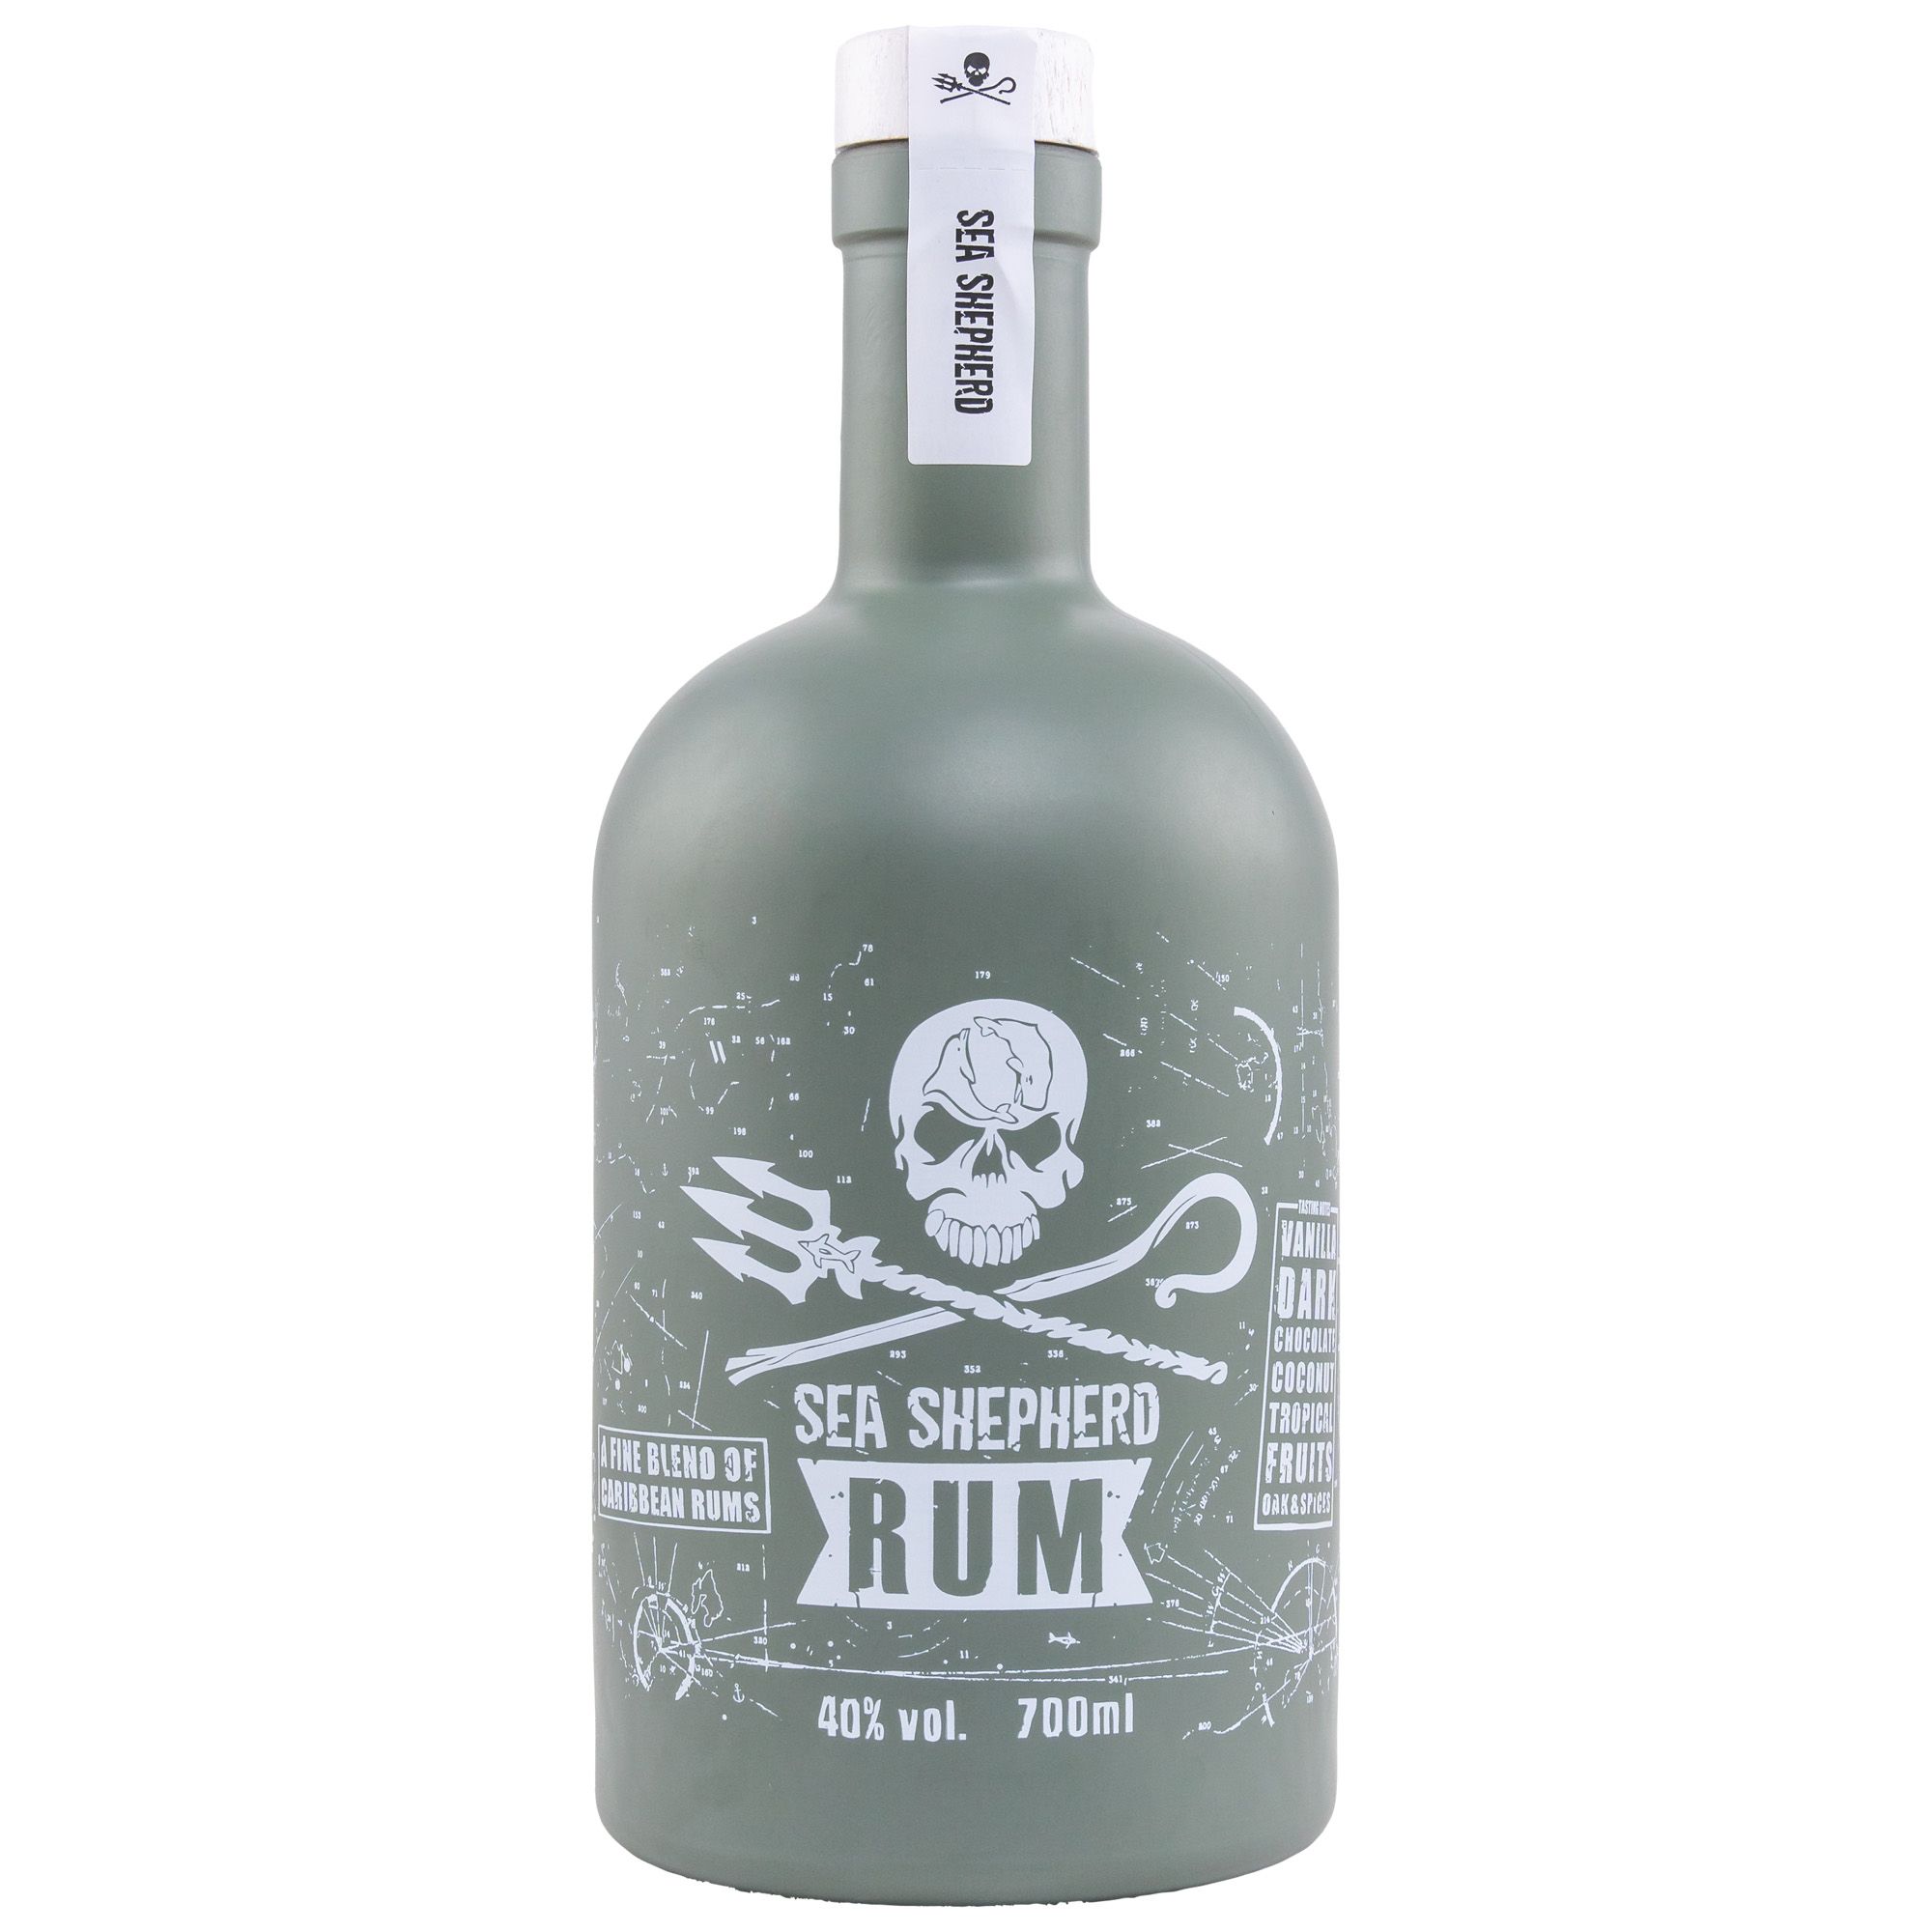 Sea Shepherd - Rum - A fine blend of Caribbean rums - 40% vol.